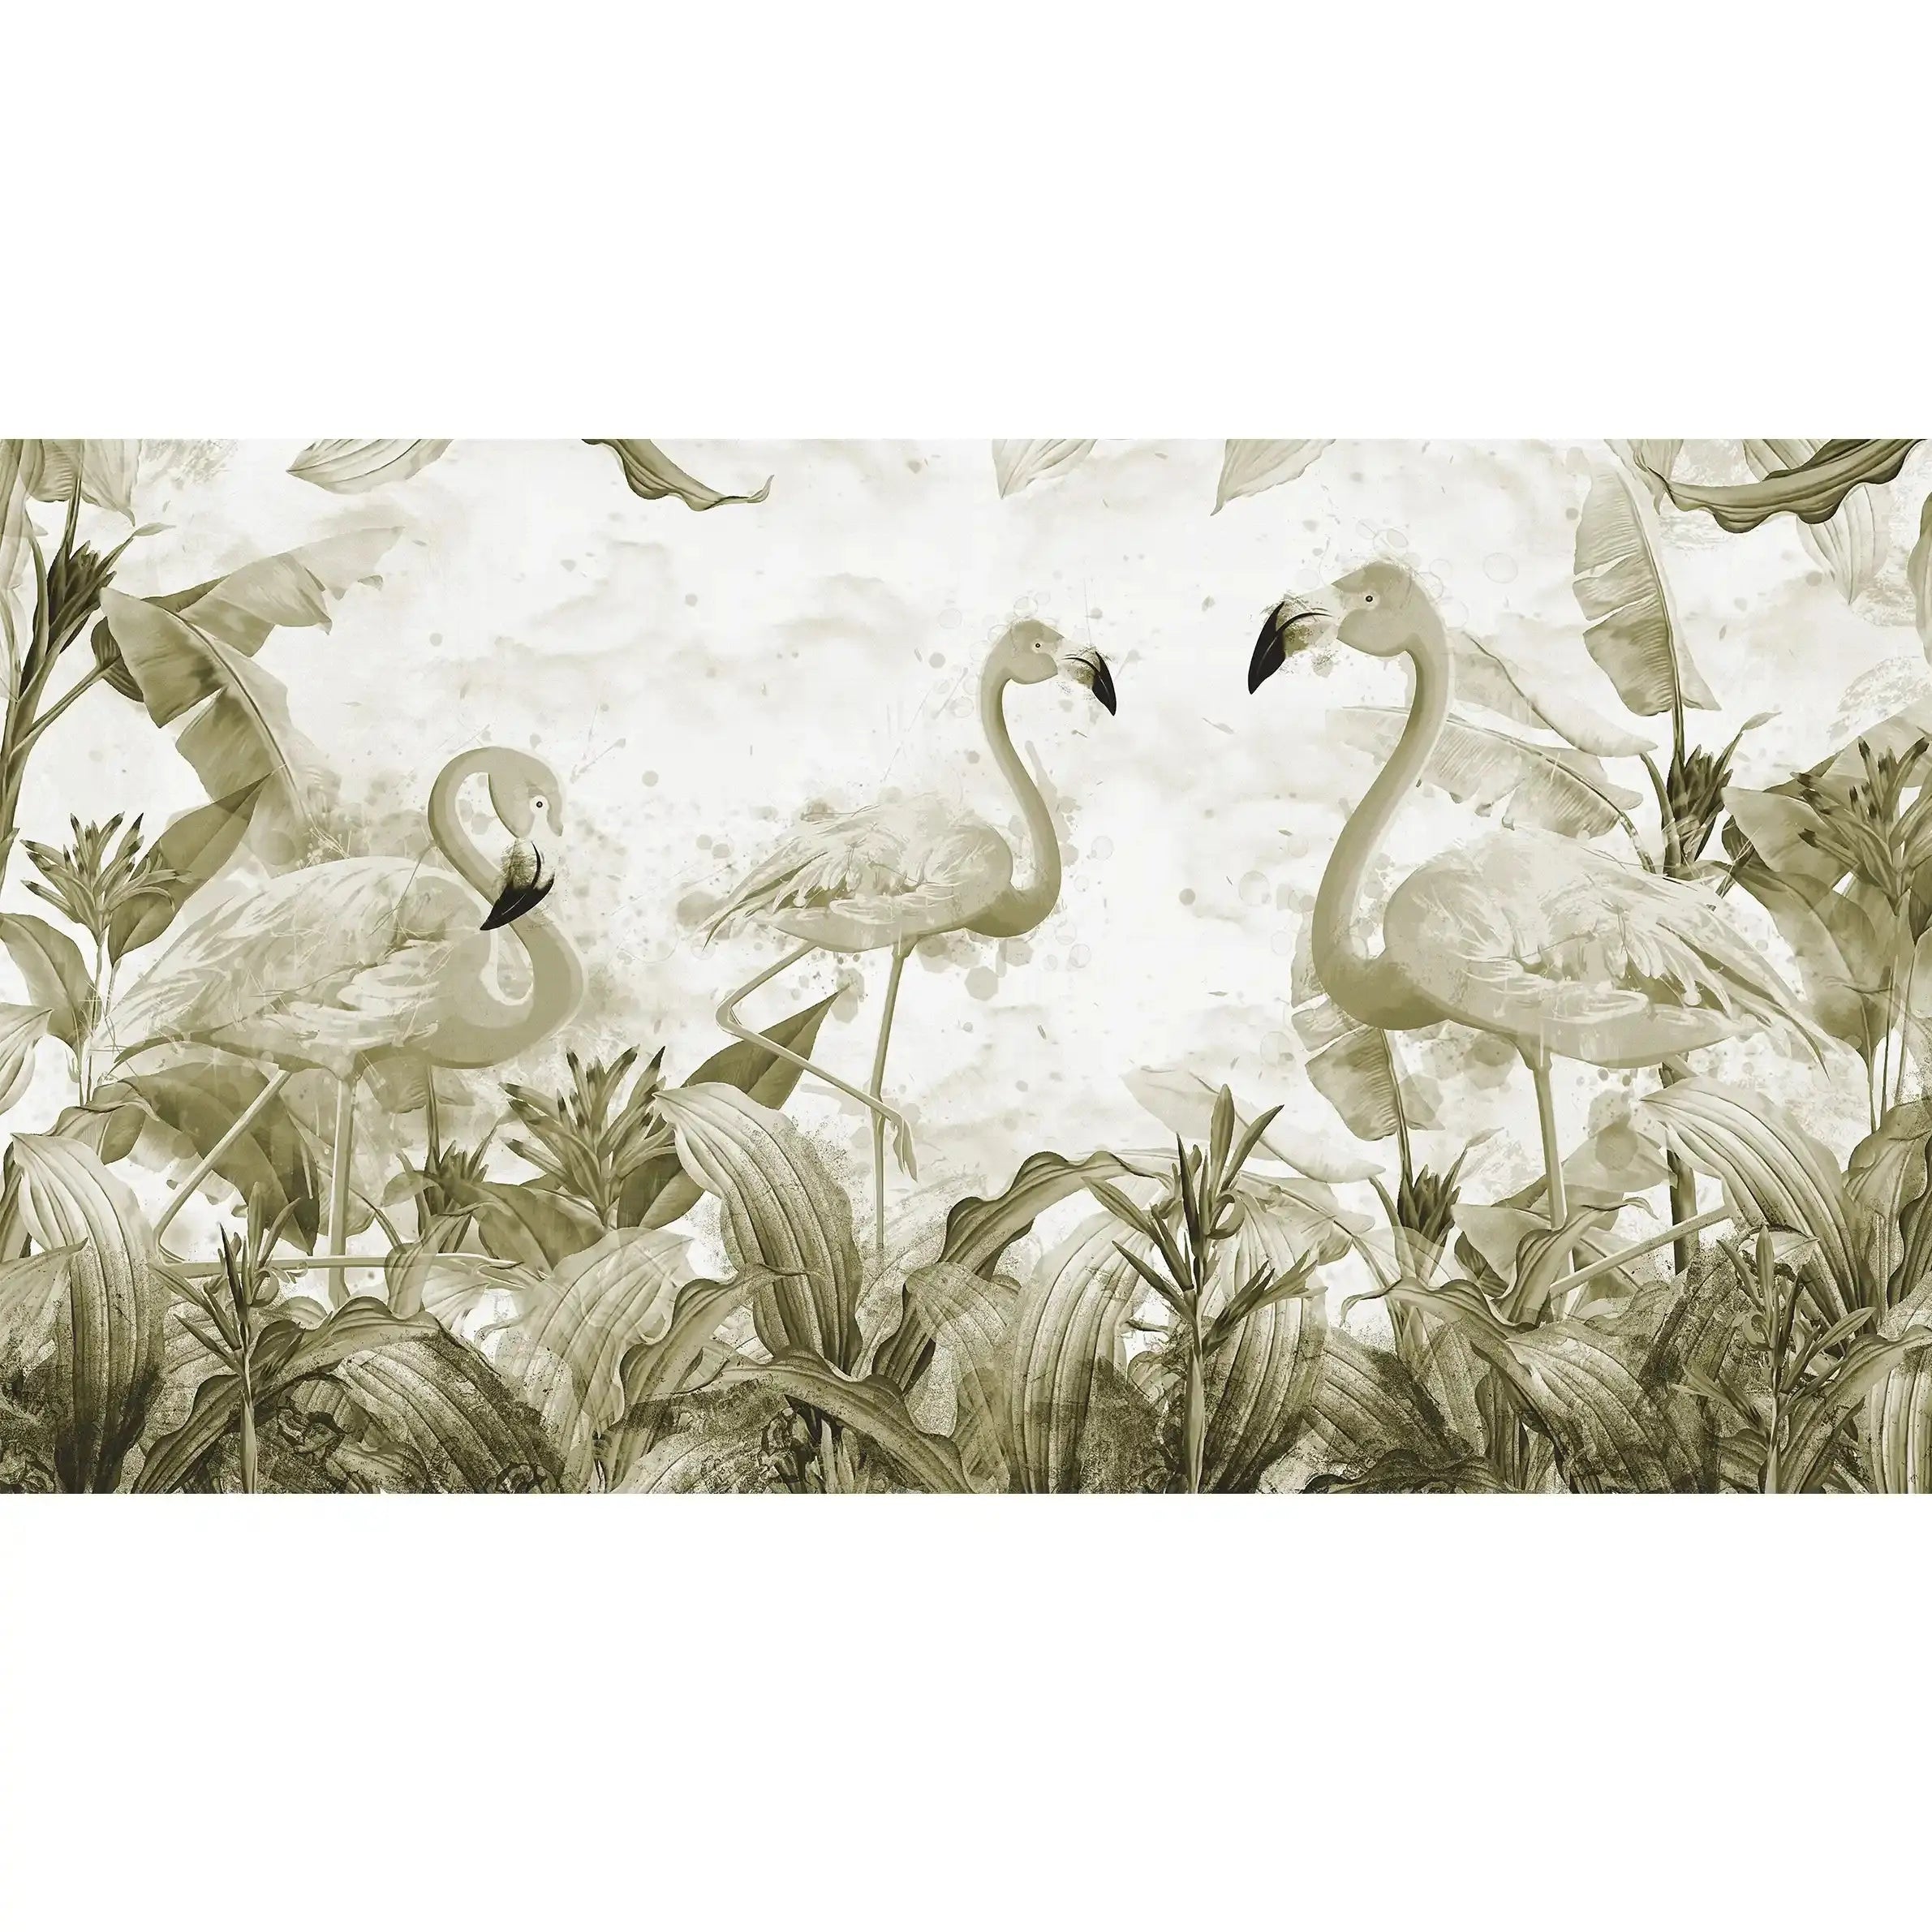 3069-F / Tropical Peel & Stick Wallpaper – Vibrant Green Flamingo and Leaf Design for DIY Home Decor - Artevella